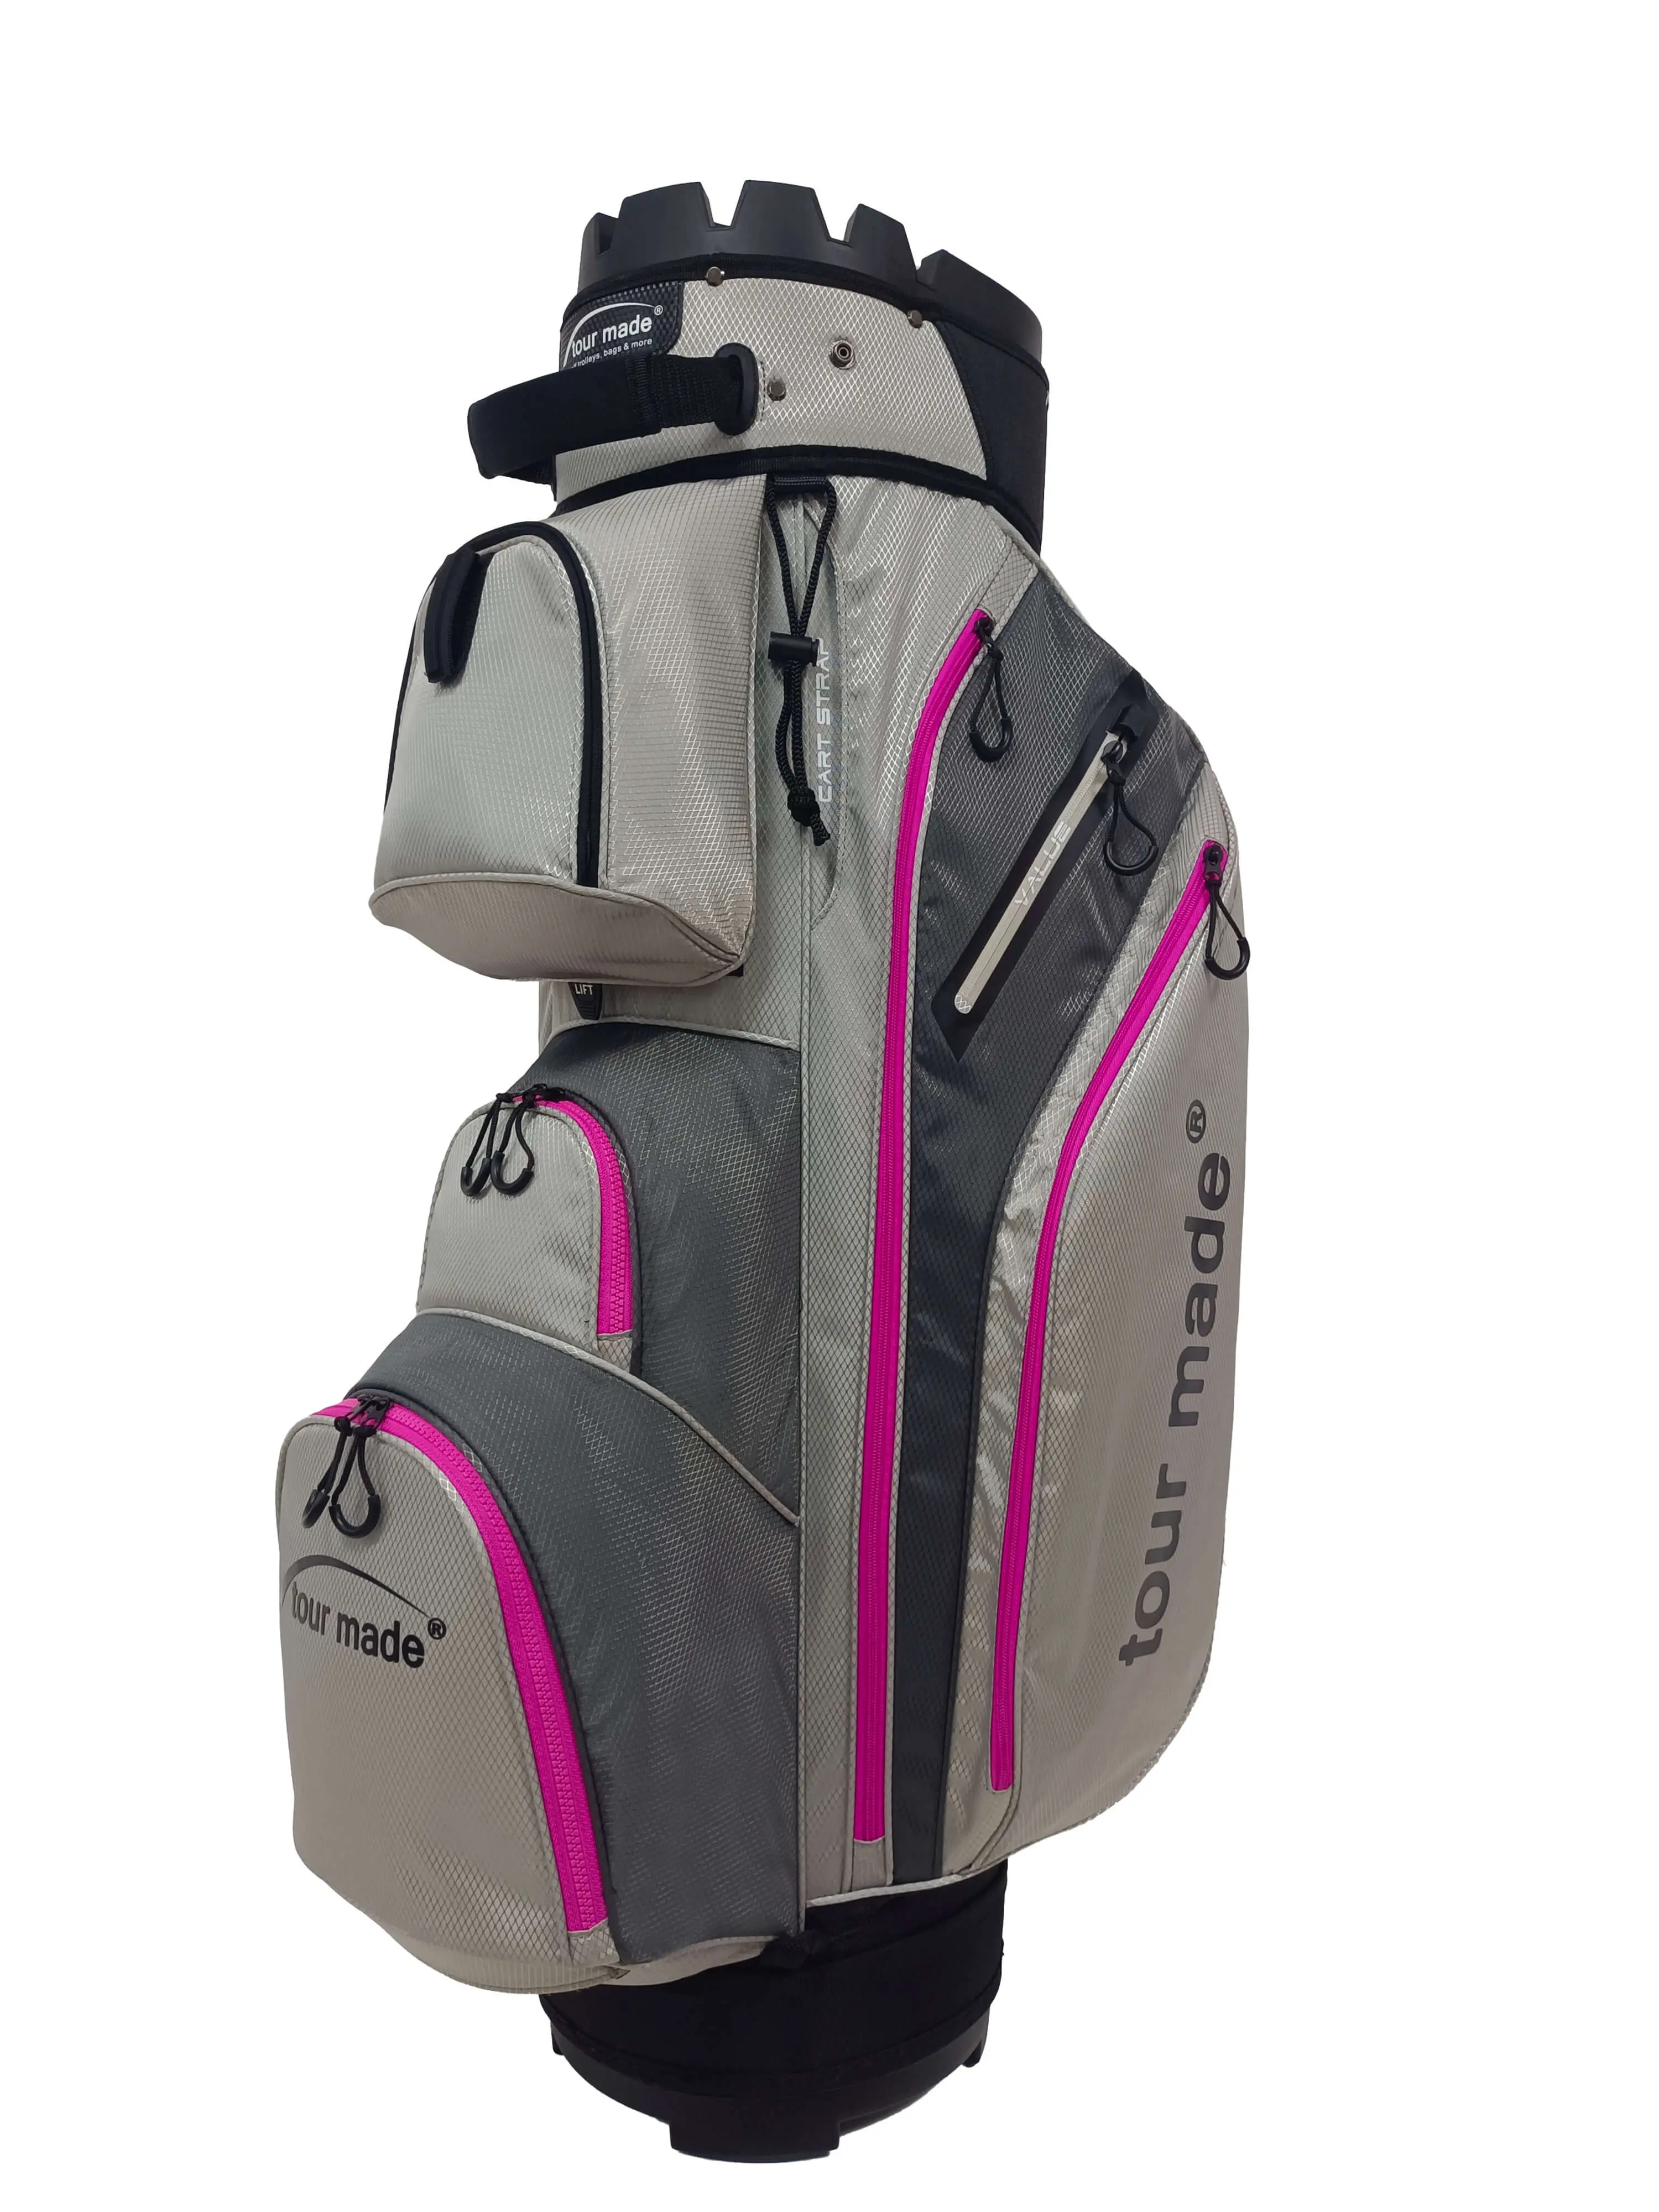 PRE-SALE tour made organiser golf bag with magnetic pocket